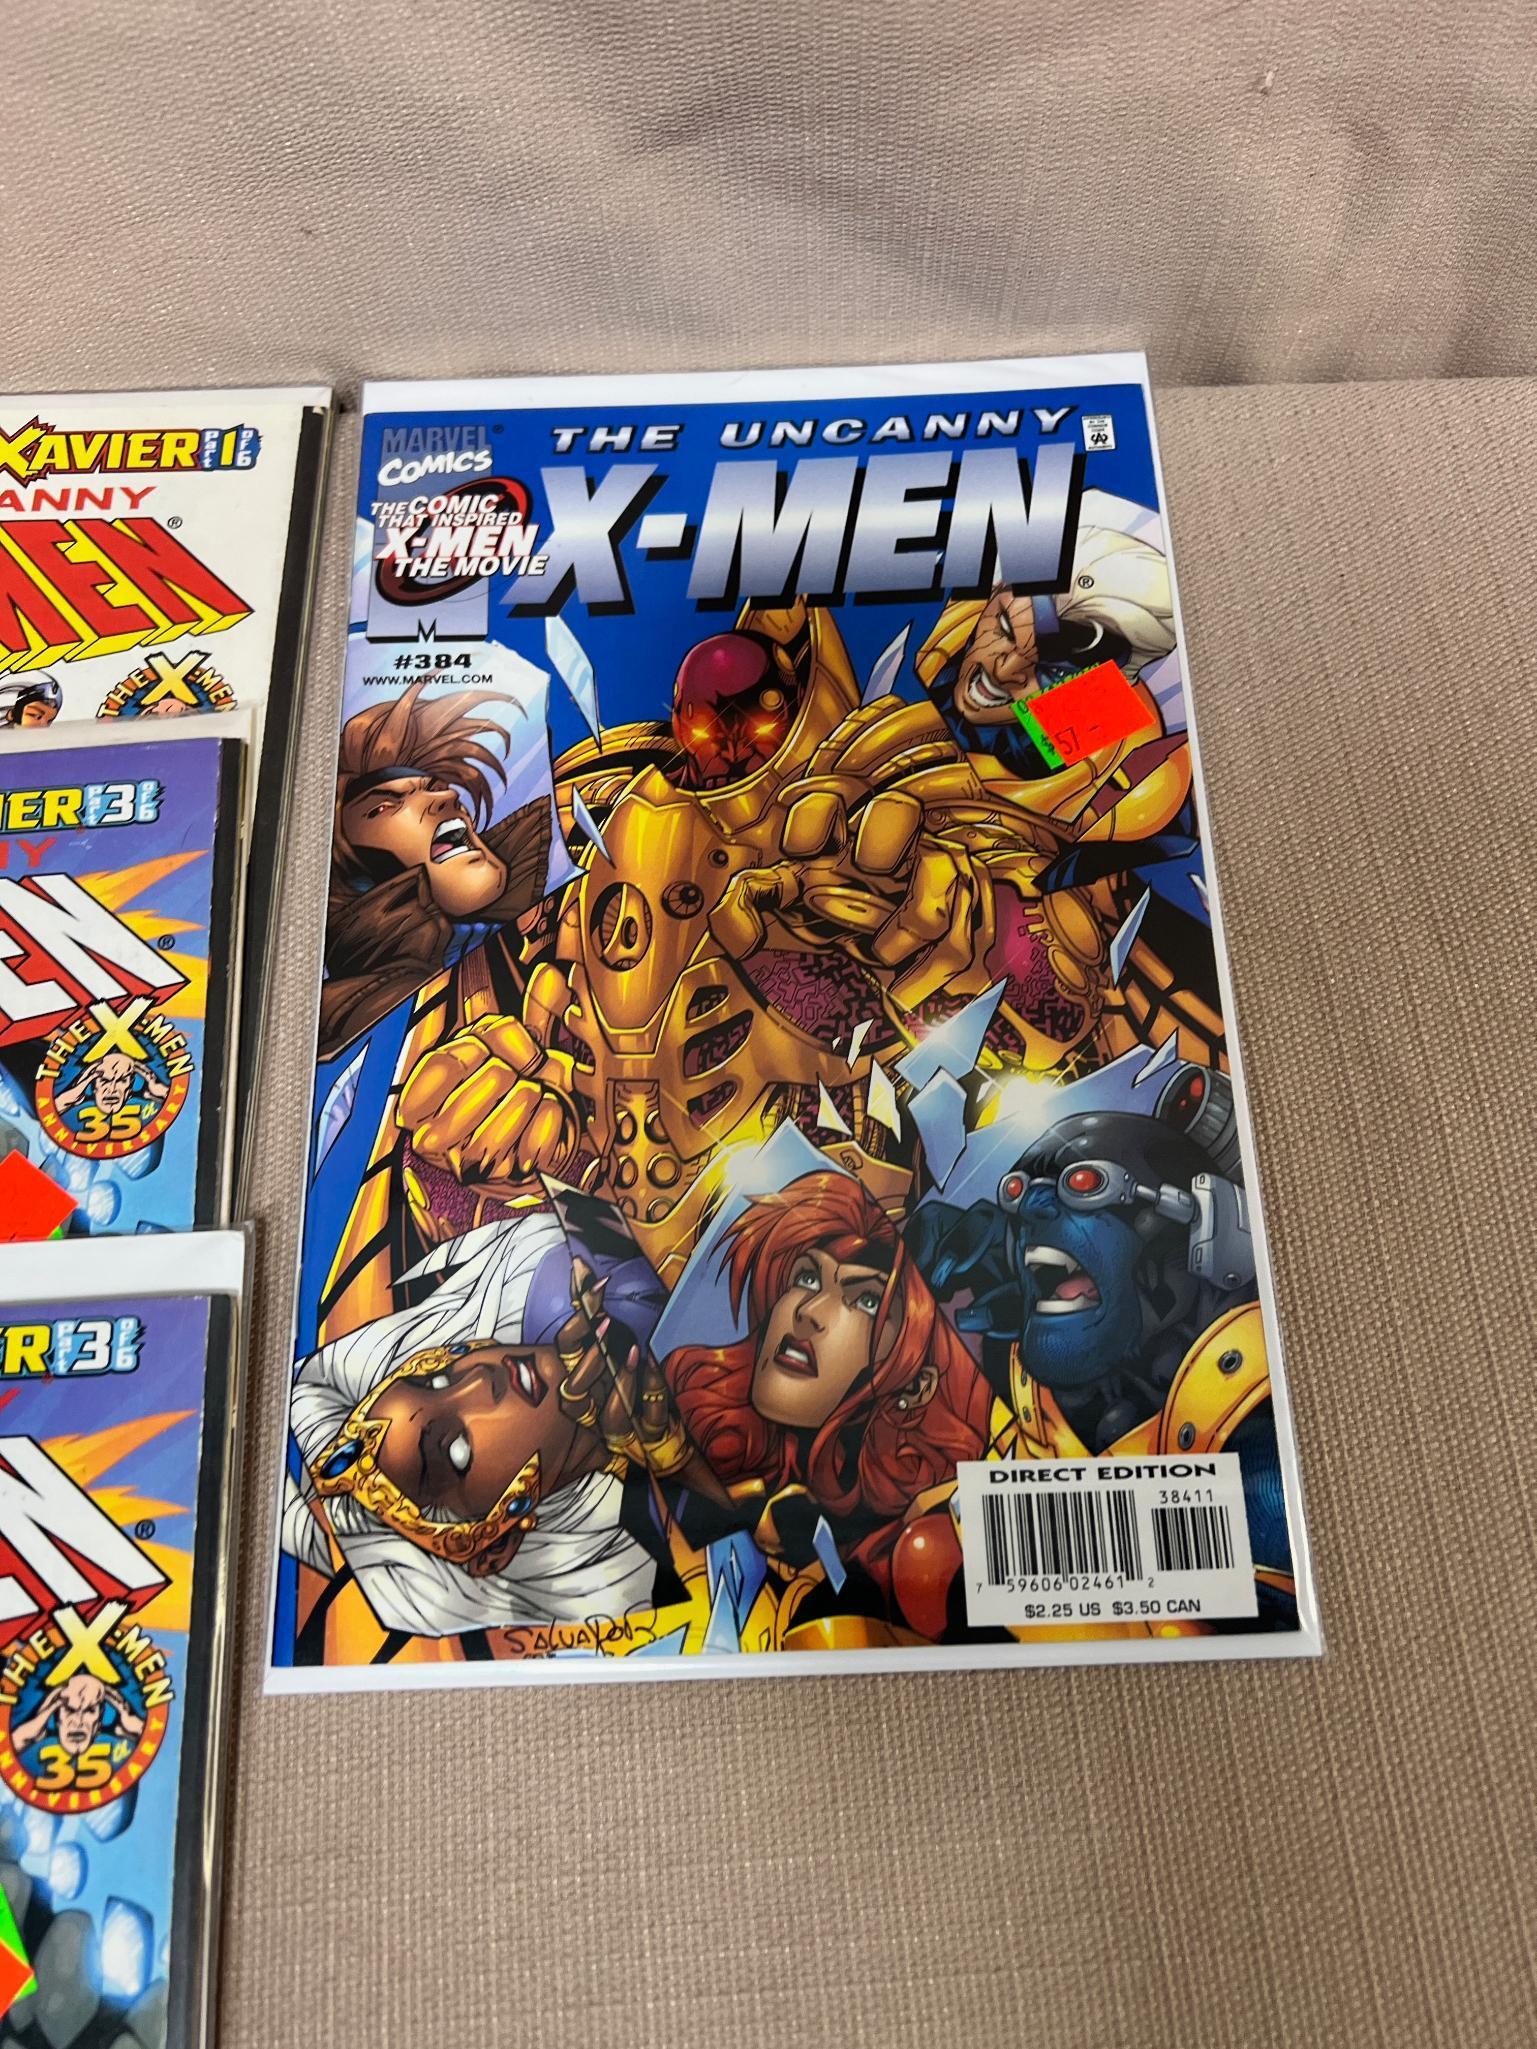 17 Uncanny X-Men Comic Books, see list below